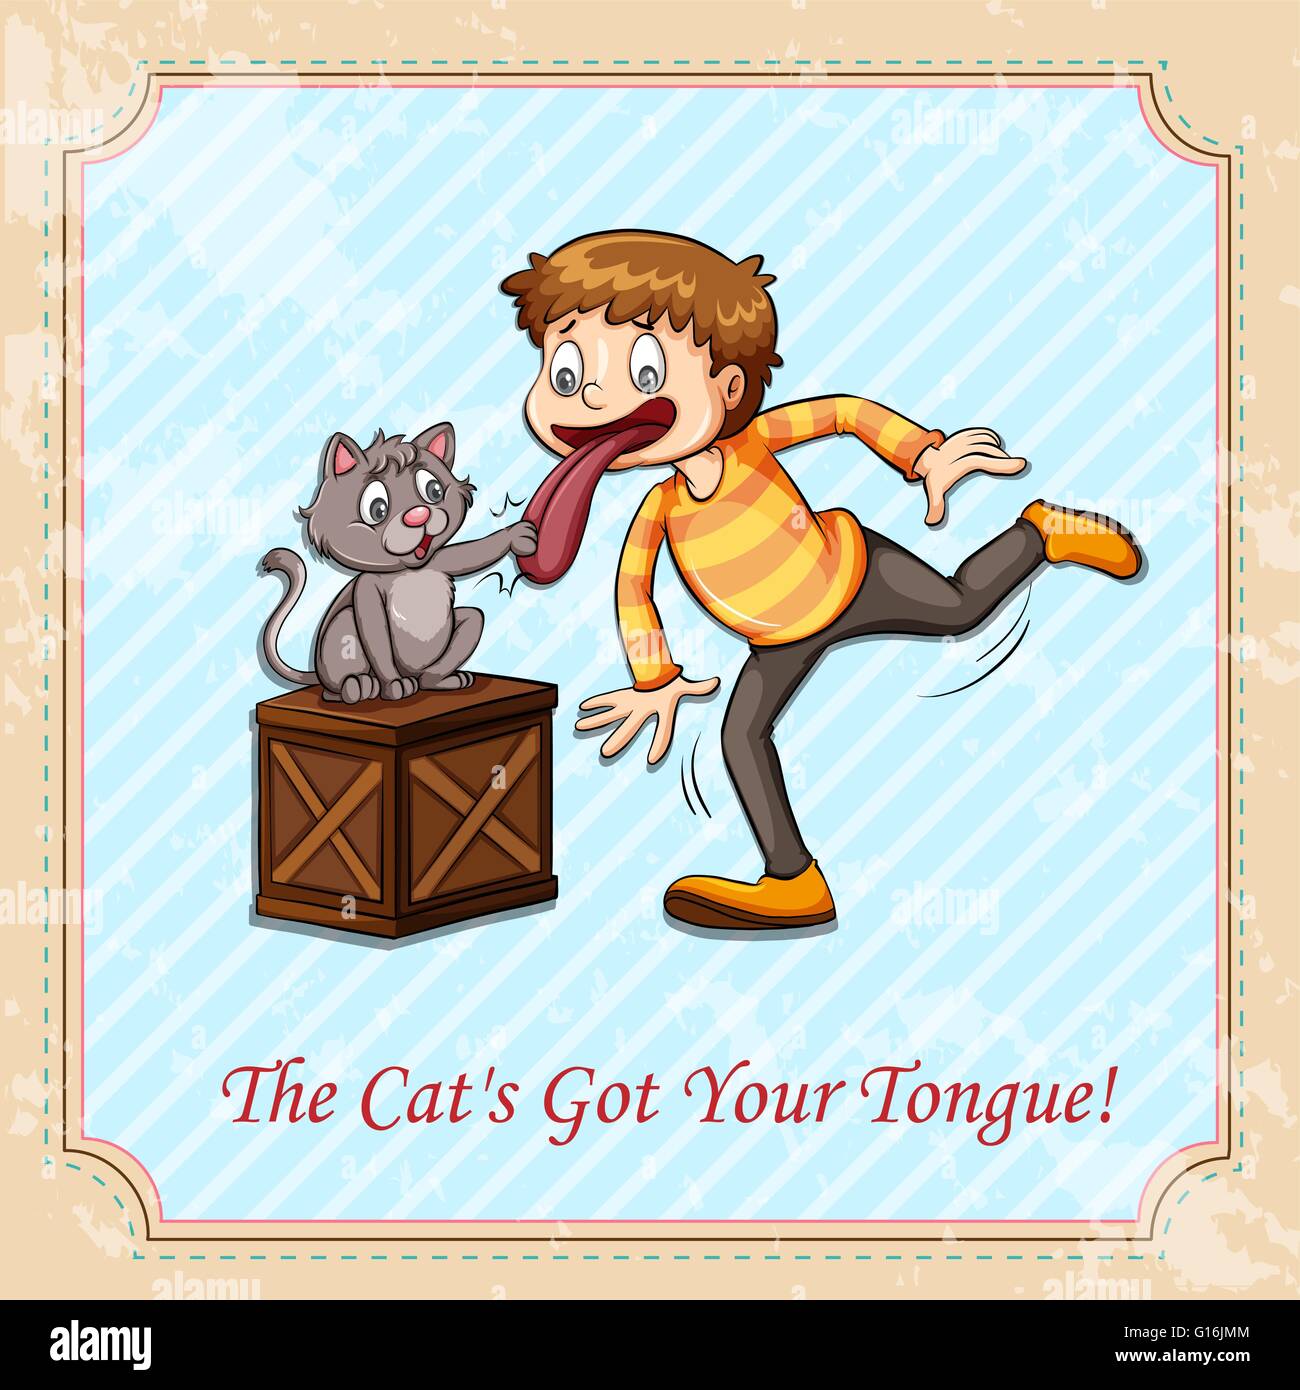 Idiom cat got your tongue illustration Stock Vector